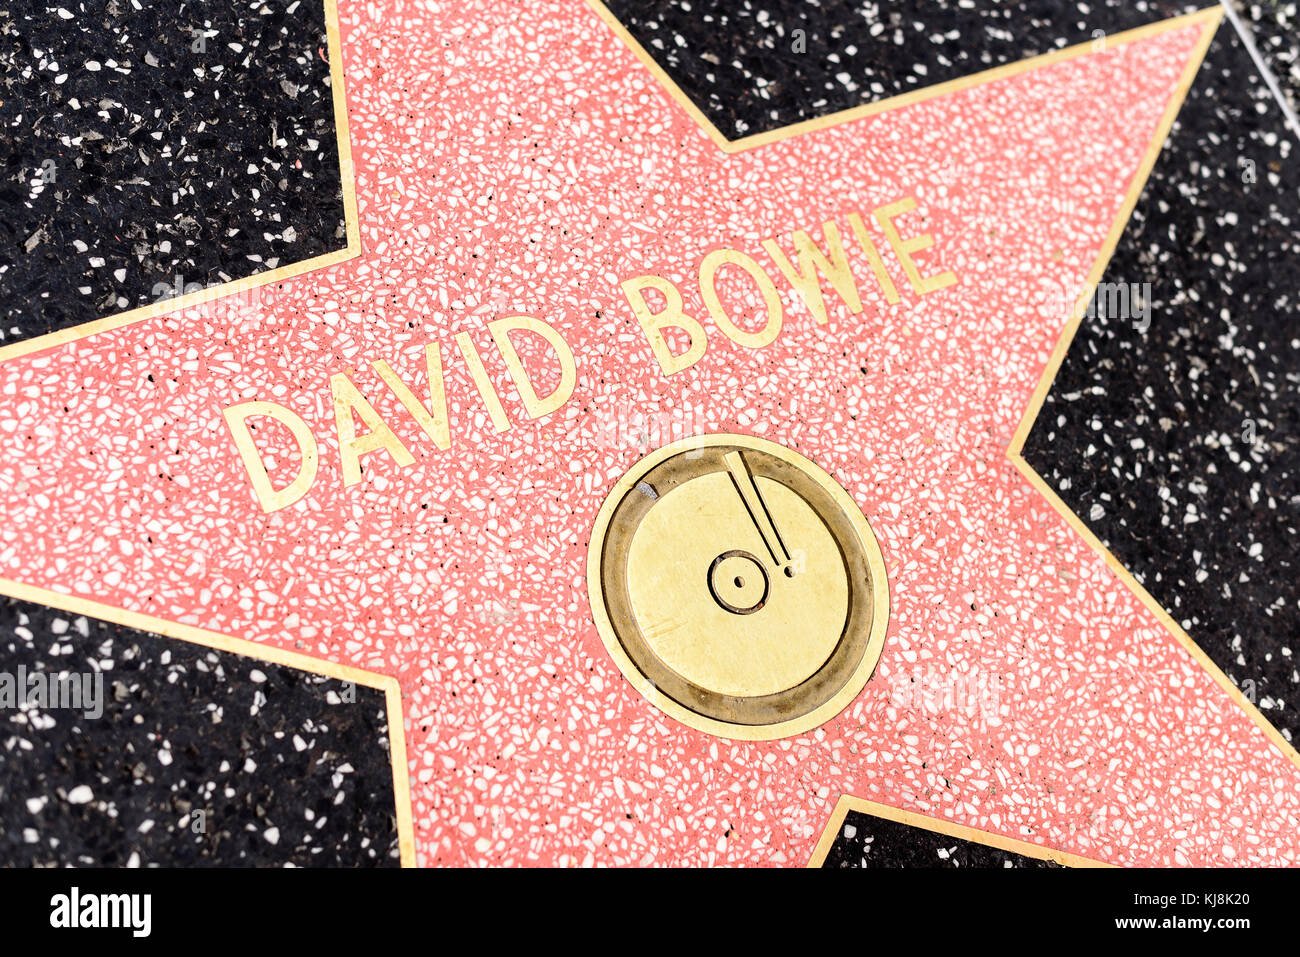 HOLLYWOOD, CA - DEZEMBER 06: David Bowie Star auf dem Hollywood Walk of Fame in Hollywood, Kalifornien am 6. Dezember 2016. Stockfoto